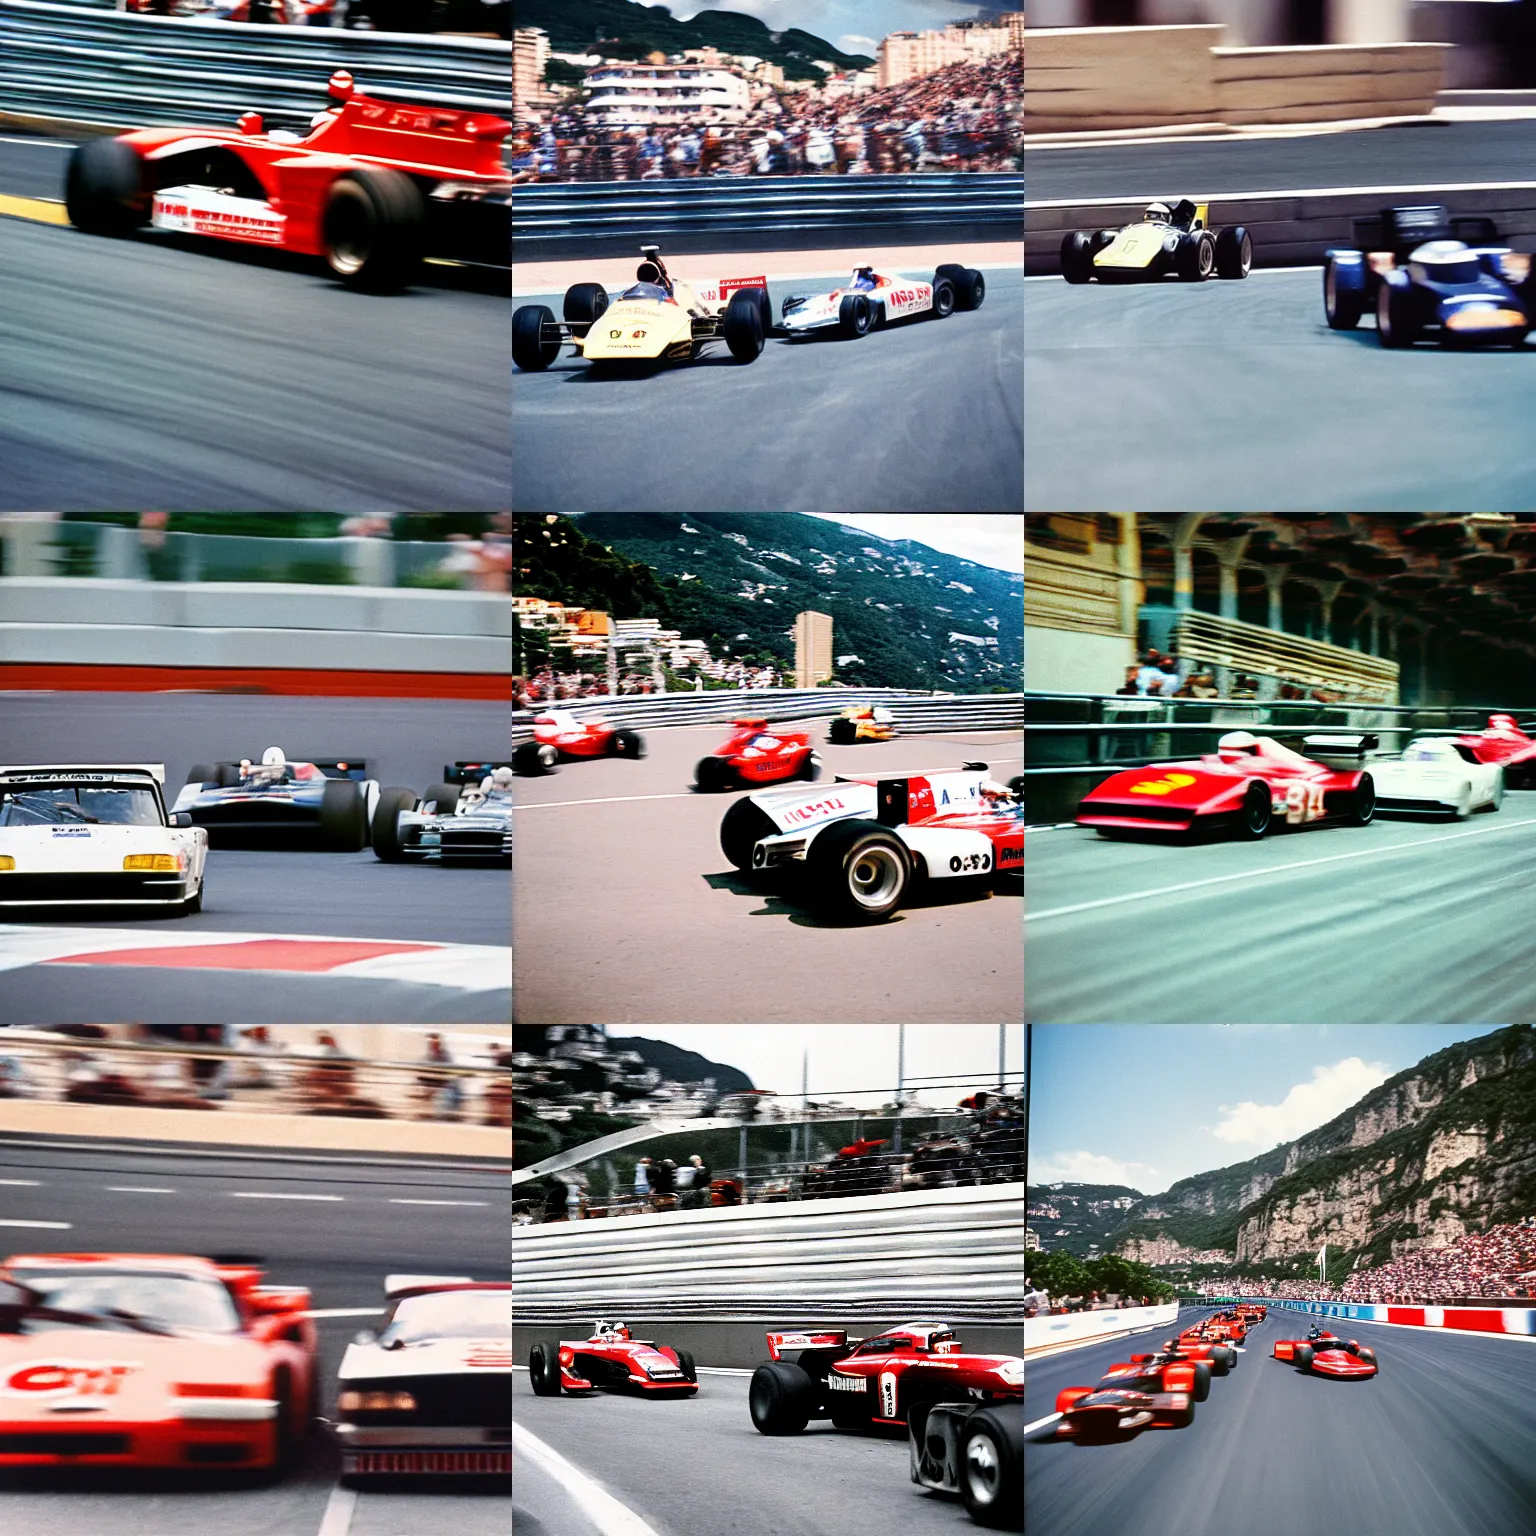 Prompt: car race overtaking at monaco, 9 0 s, film grain, motorsports photography